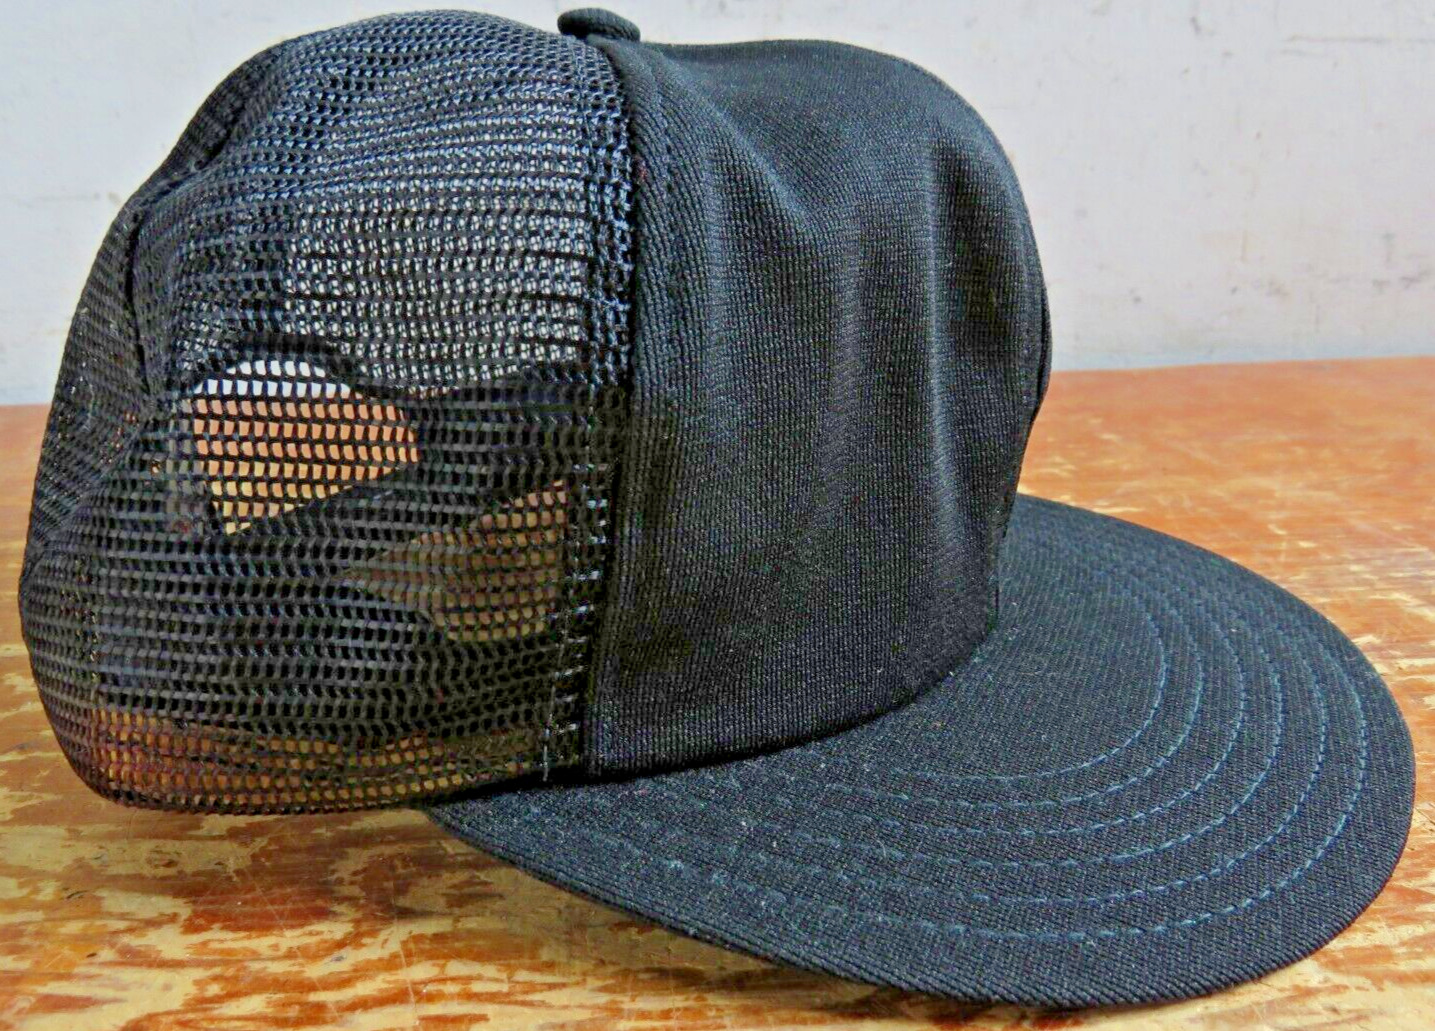 Vintage Stevens Caps Baseball Cap trucker hat black Size Large 7.25-7.625 NOS